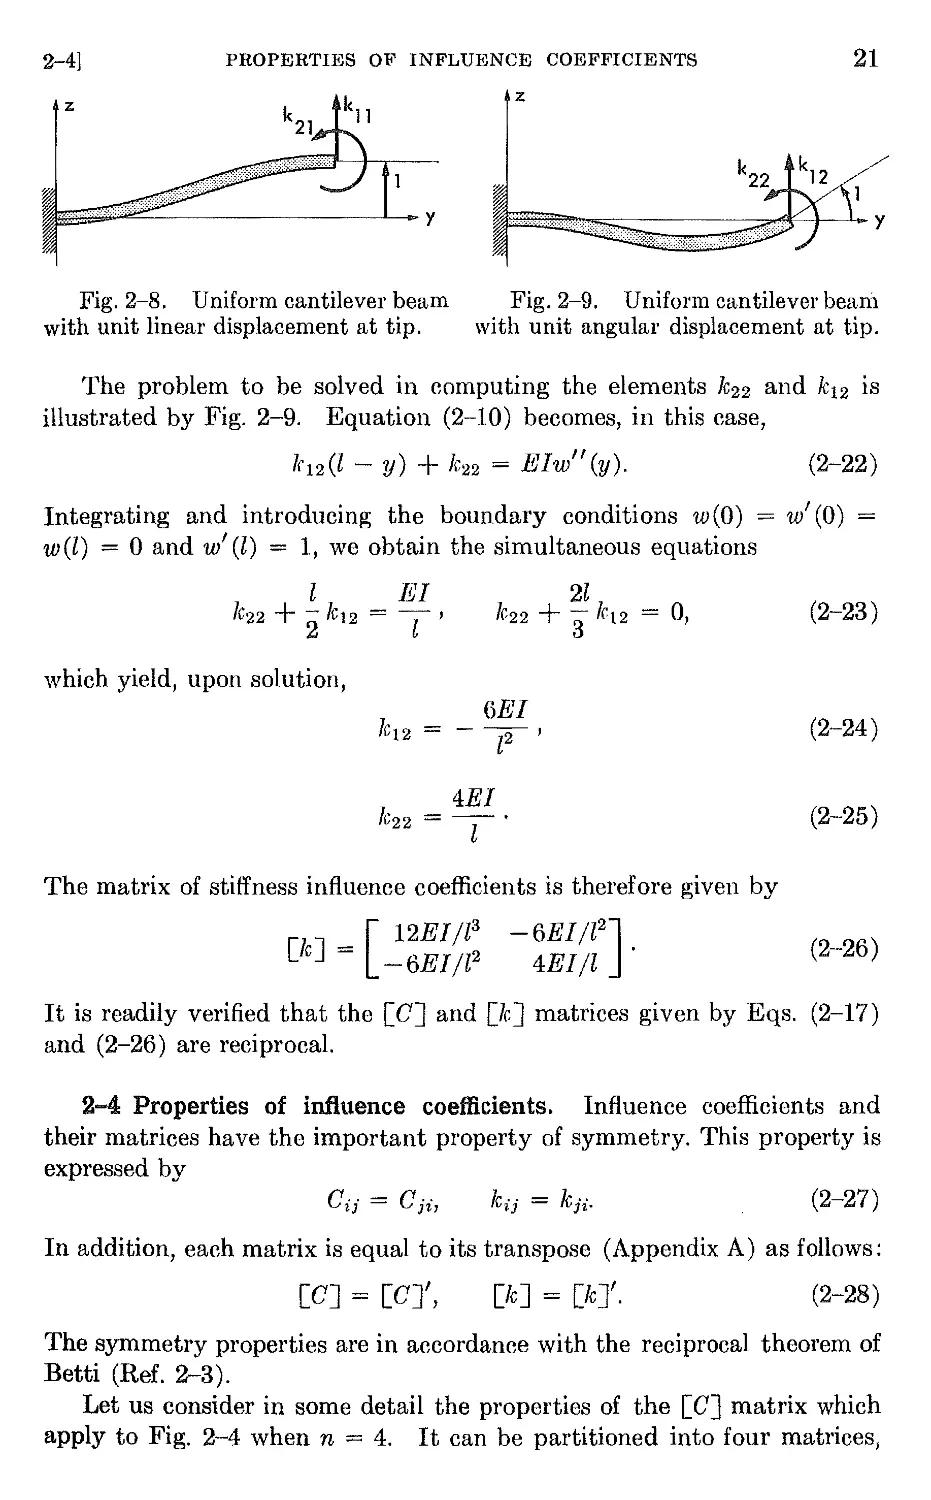 2.4 Properties of influence coefficients